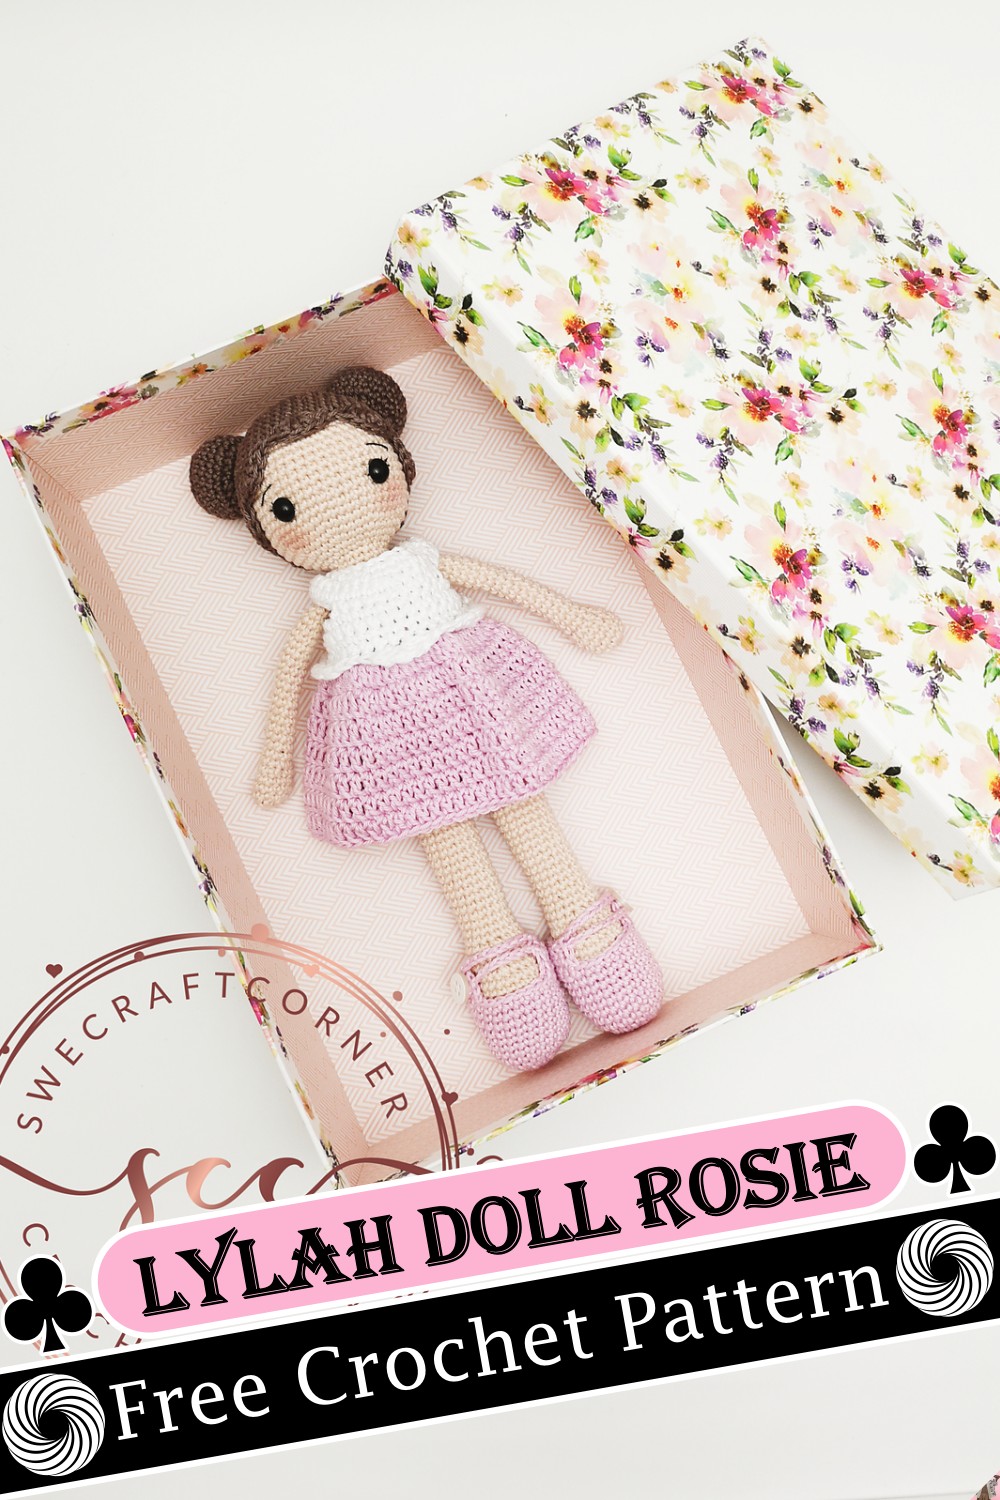 Lylah Doll Rosie